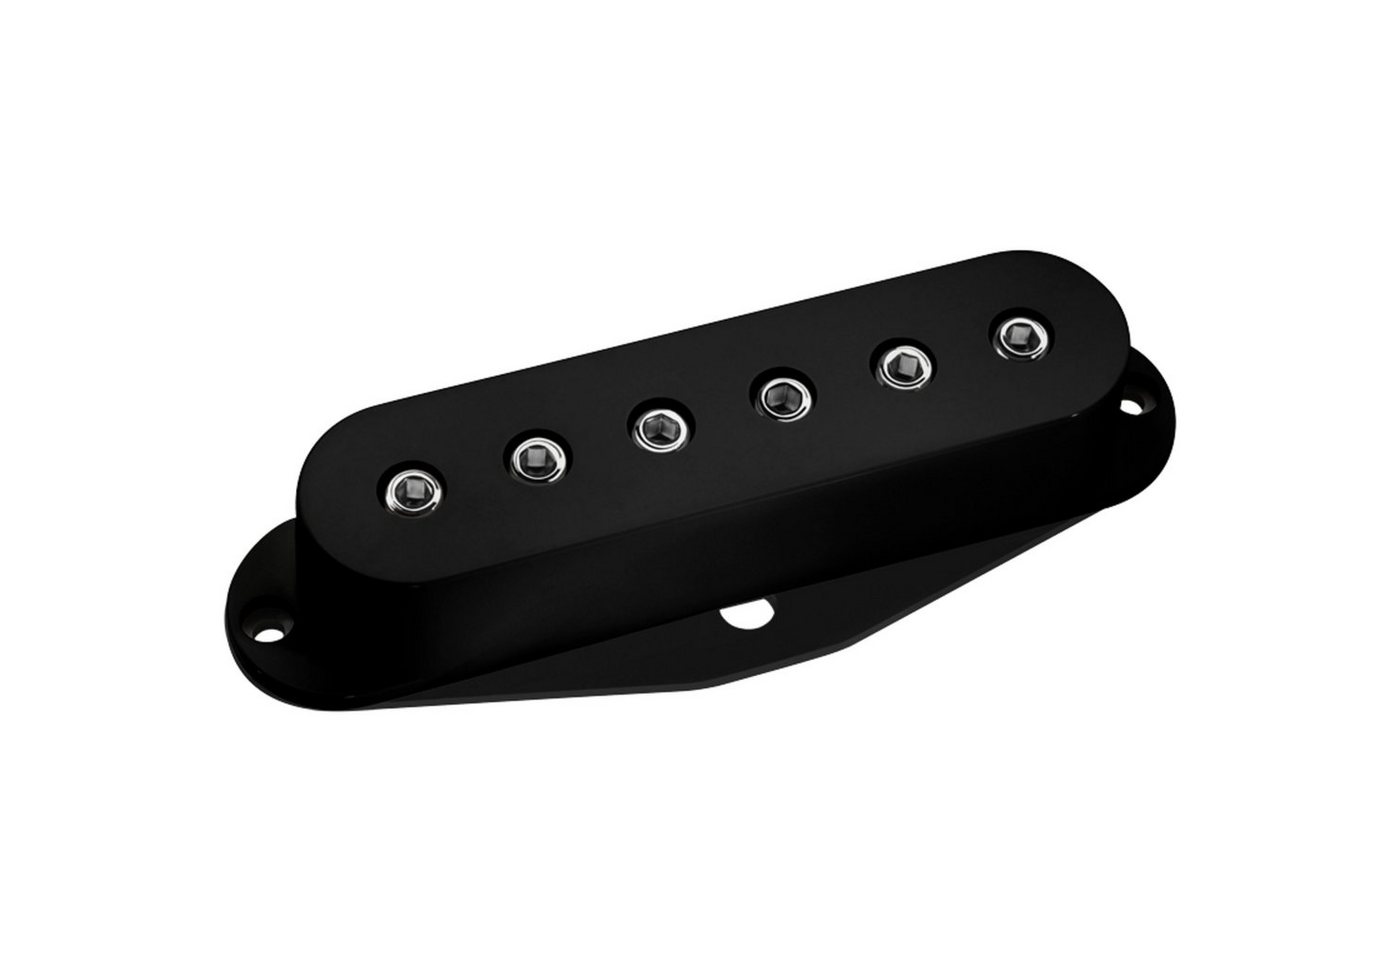 DiMarzio Tonabnehmer, (DP111 SDS-1 Black), DP111 SDS-1 Black - Single Coil Tonabnehmer für Gitarren von DiMarzio